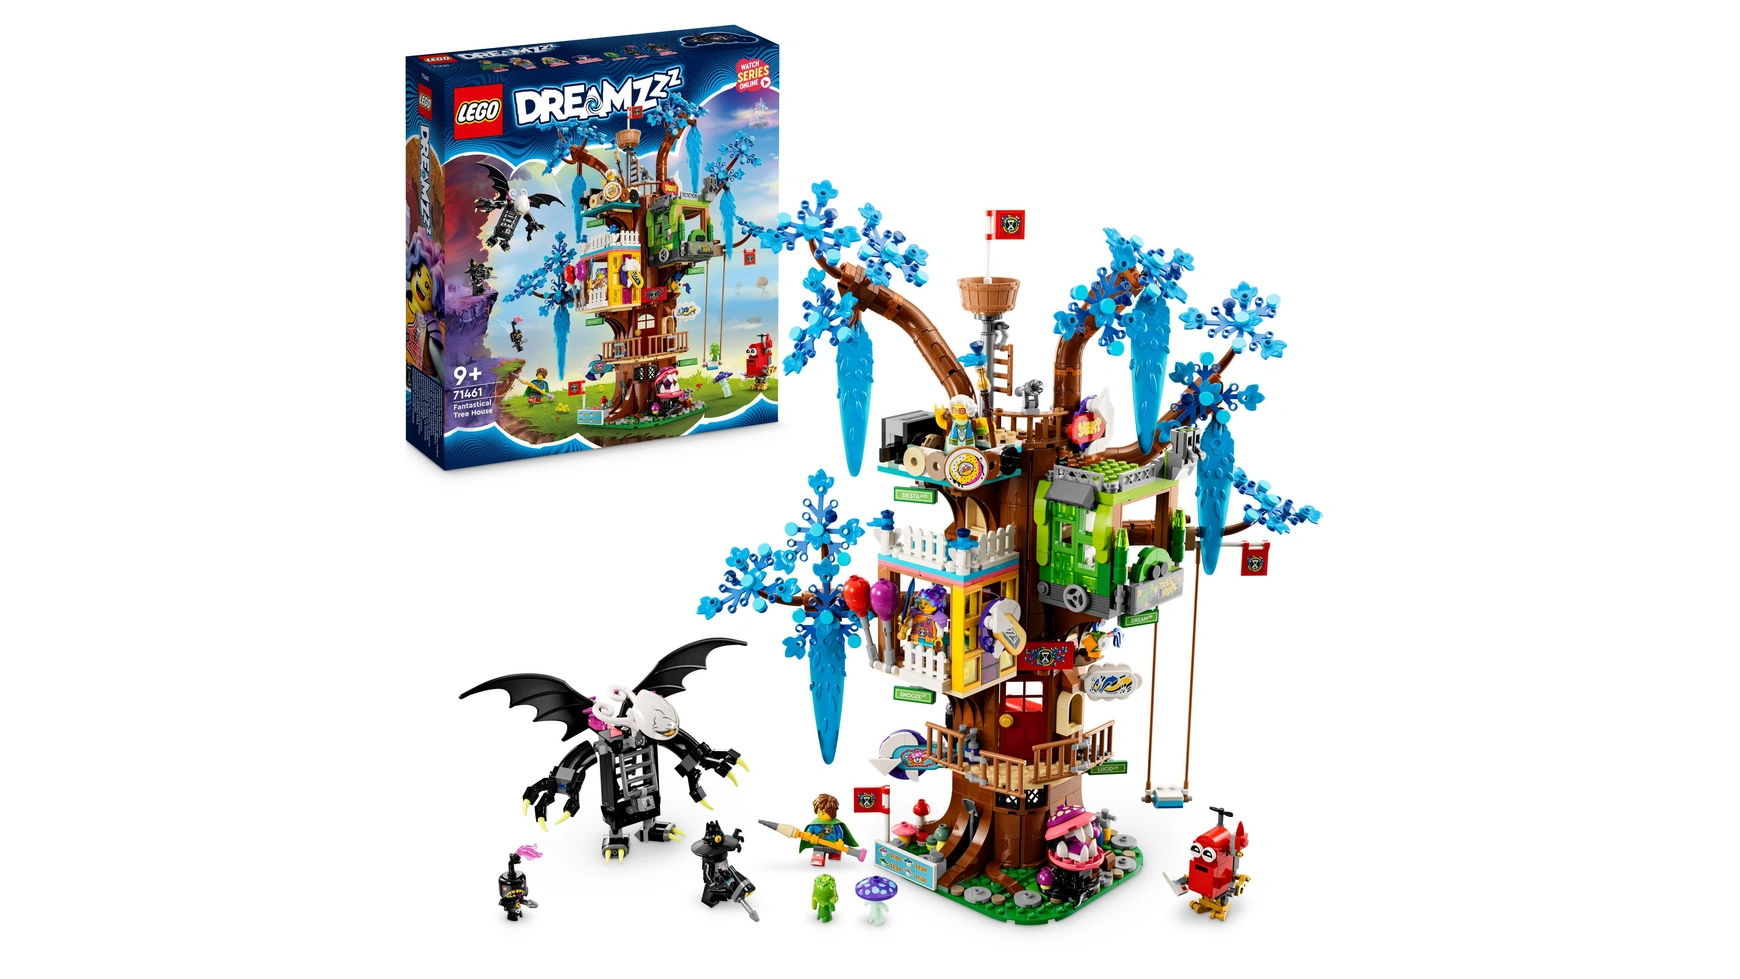 Lego DREAMZzz Фантастический домик на дереве, соберите 2 типа модели